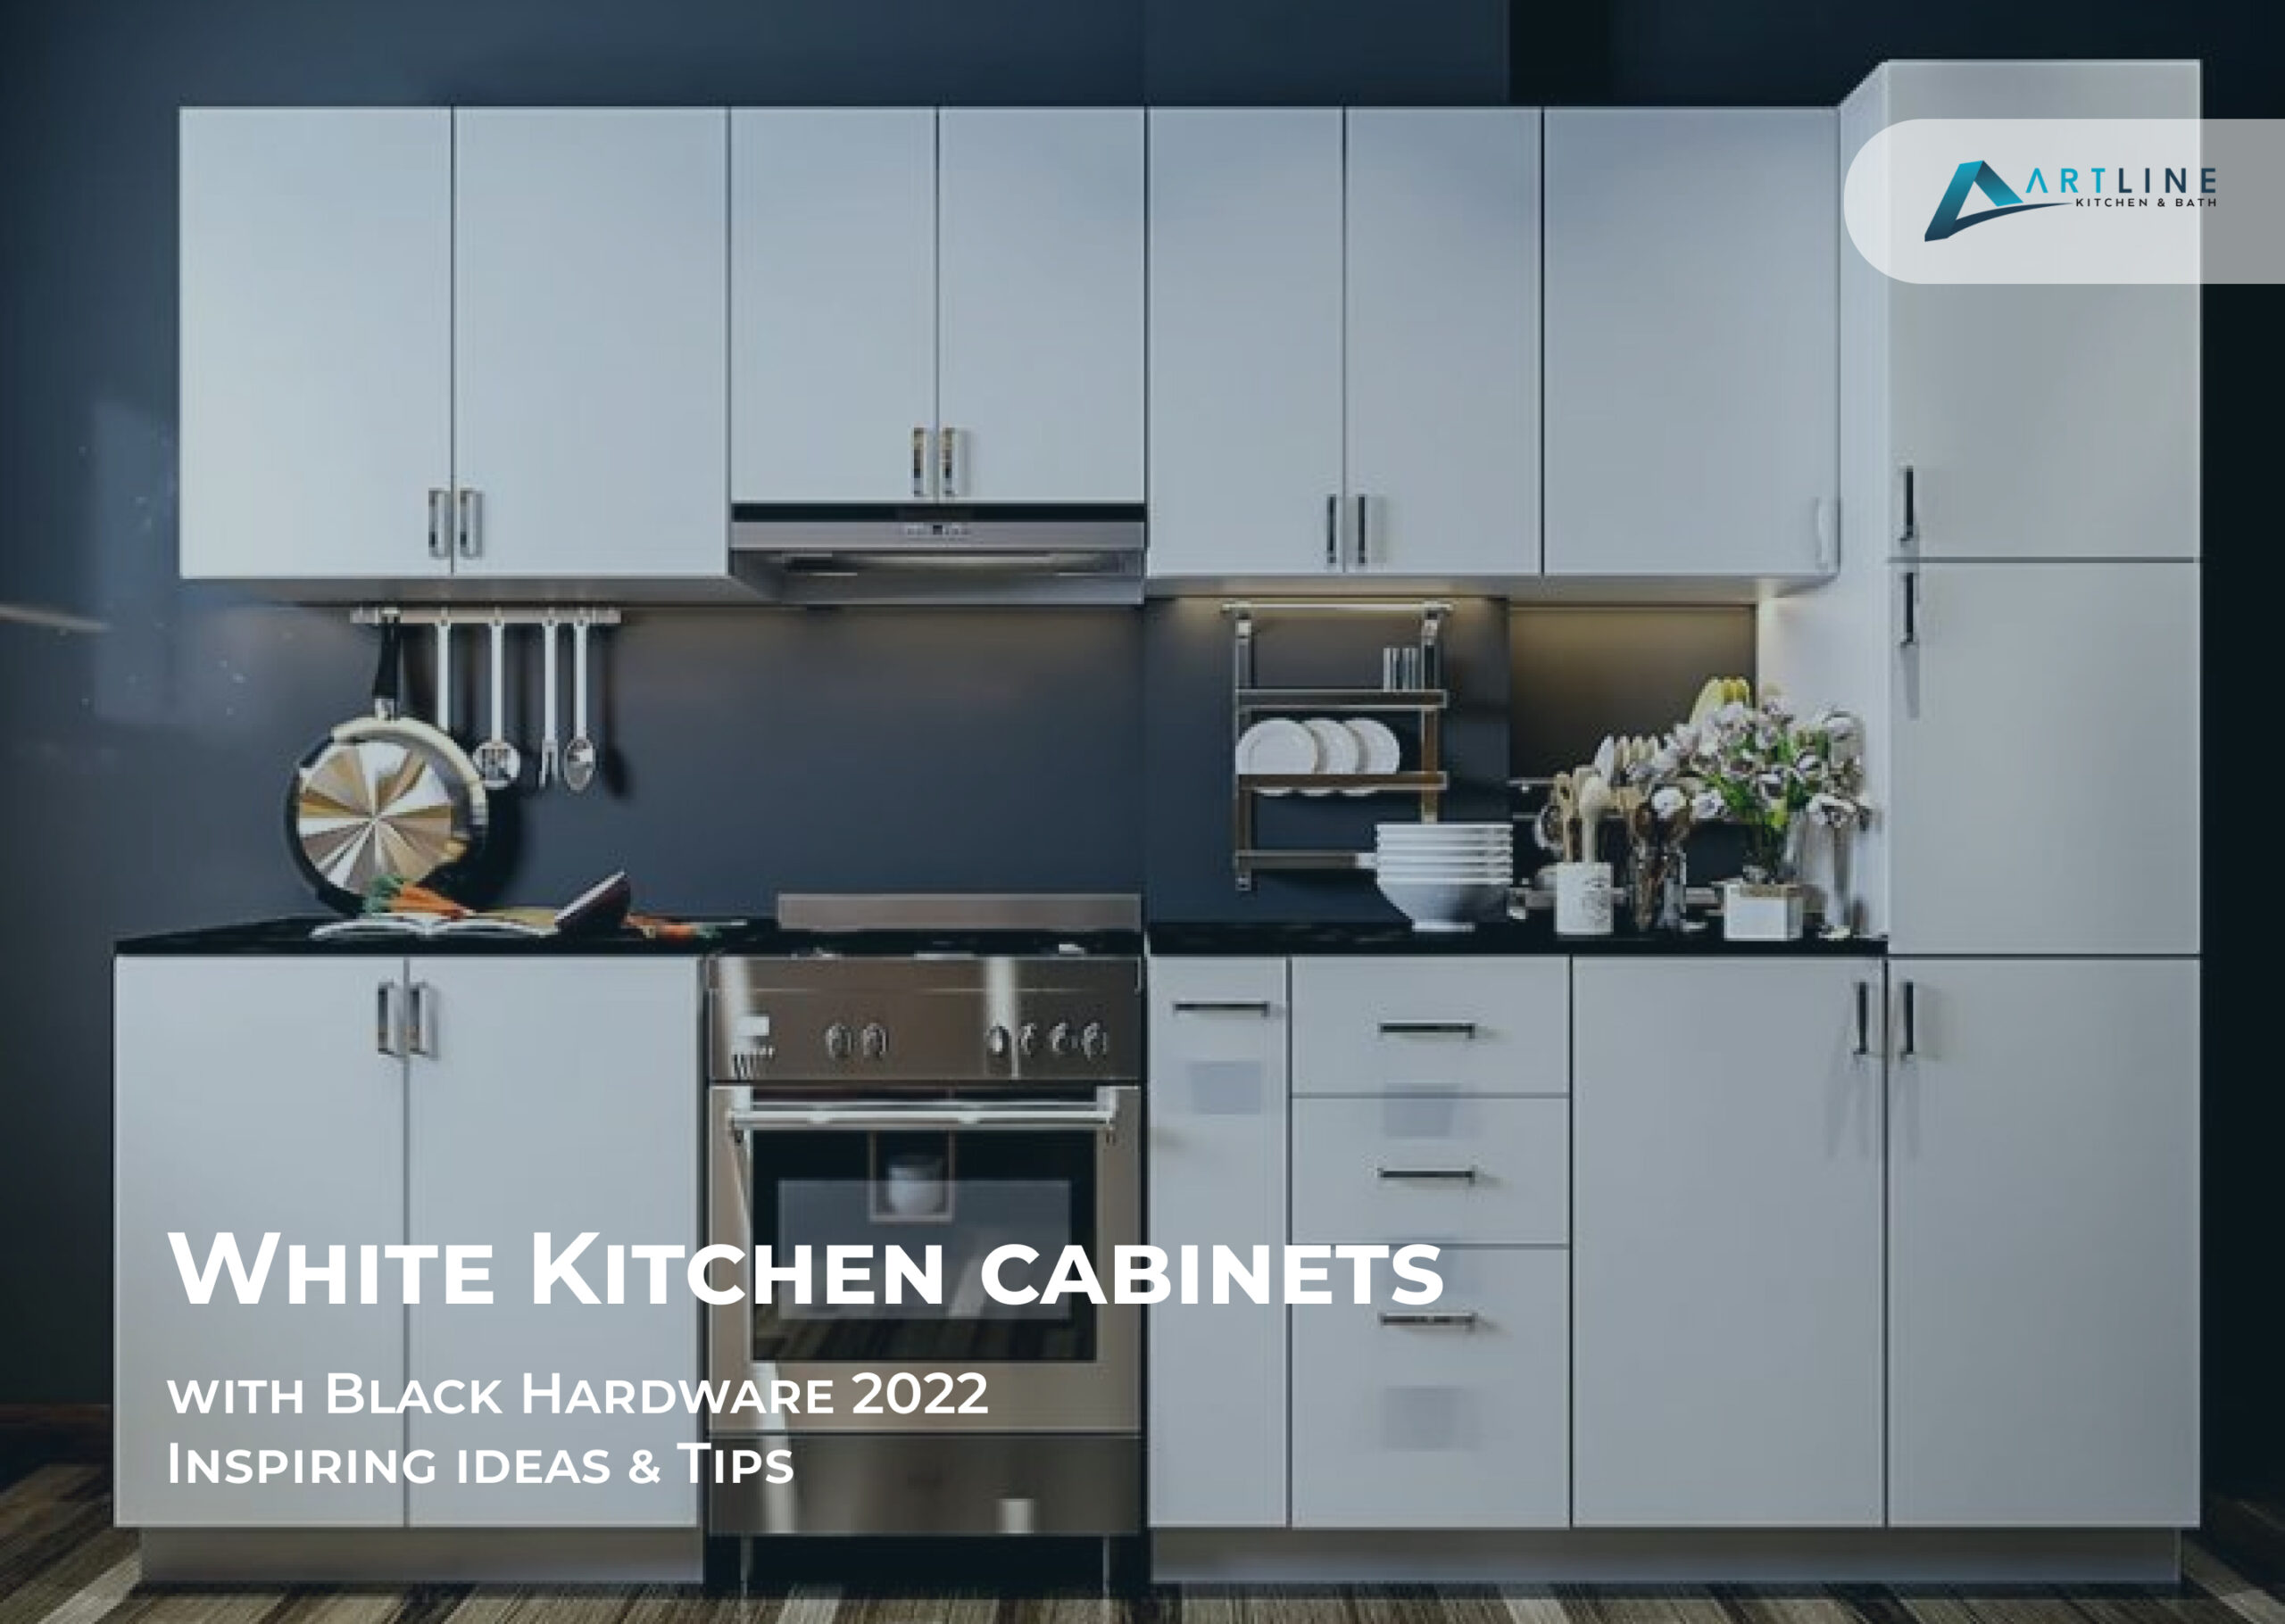 white kitchen cabinets with black hardware